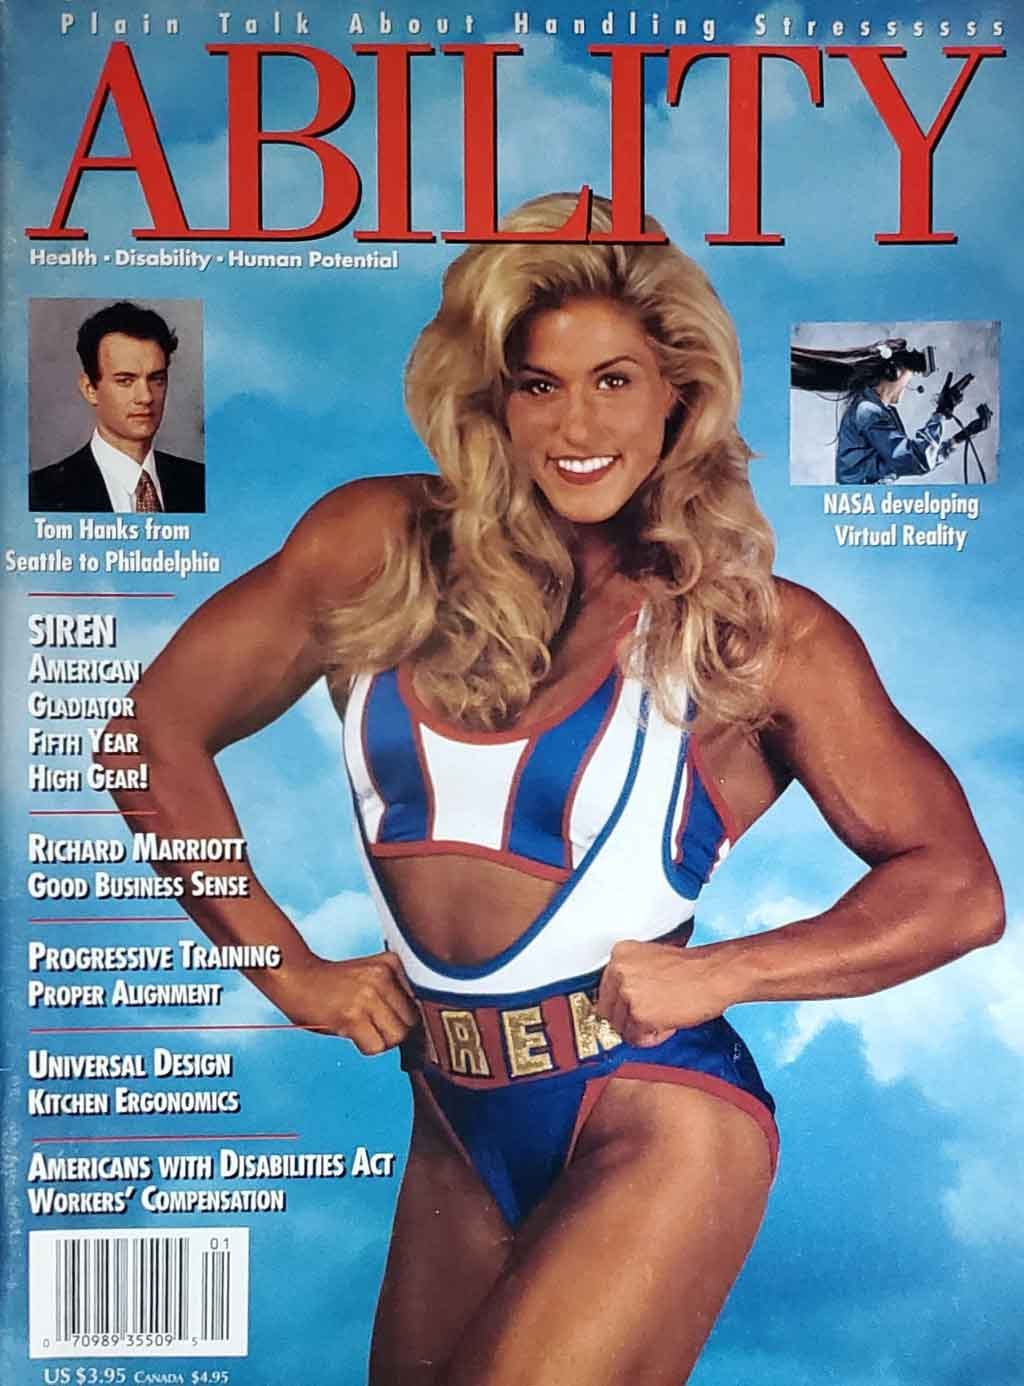 Siren American Gladiator Issue - ABILITY Magazine